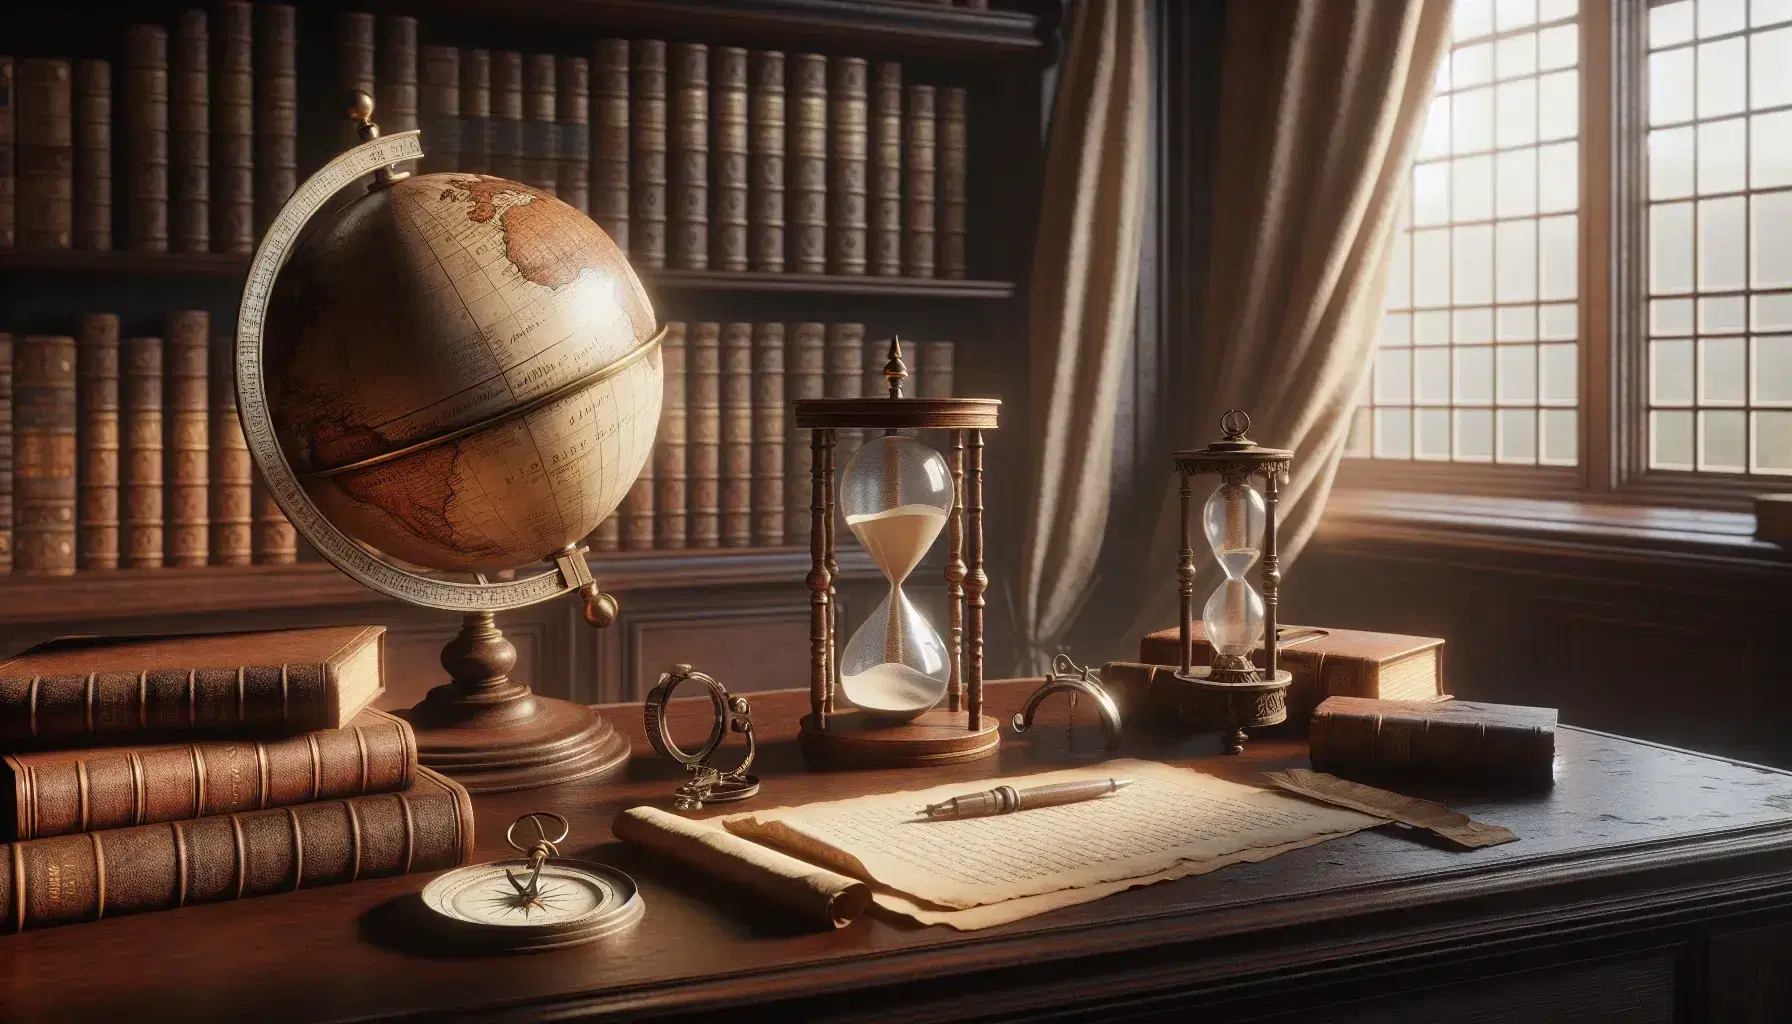 Estudio del siglo XVII con mesa de madera oscura, globo terráqueo antiguo, compás sobre papel, reloj de arena y estantería con libros encuadernados.